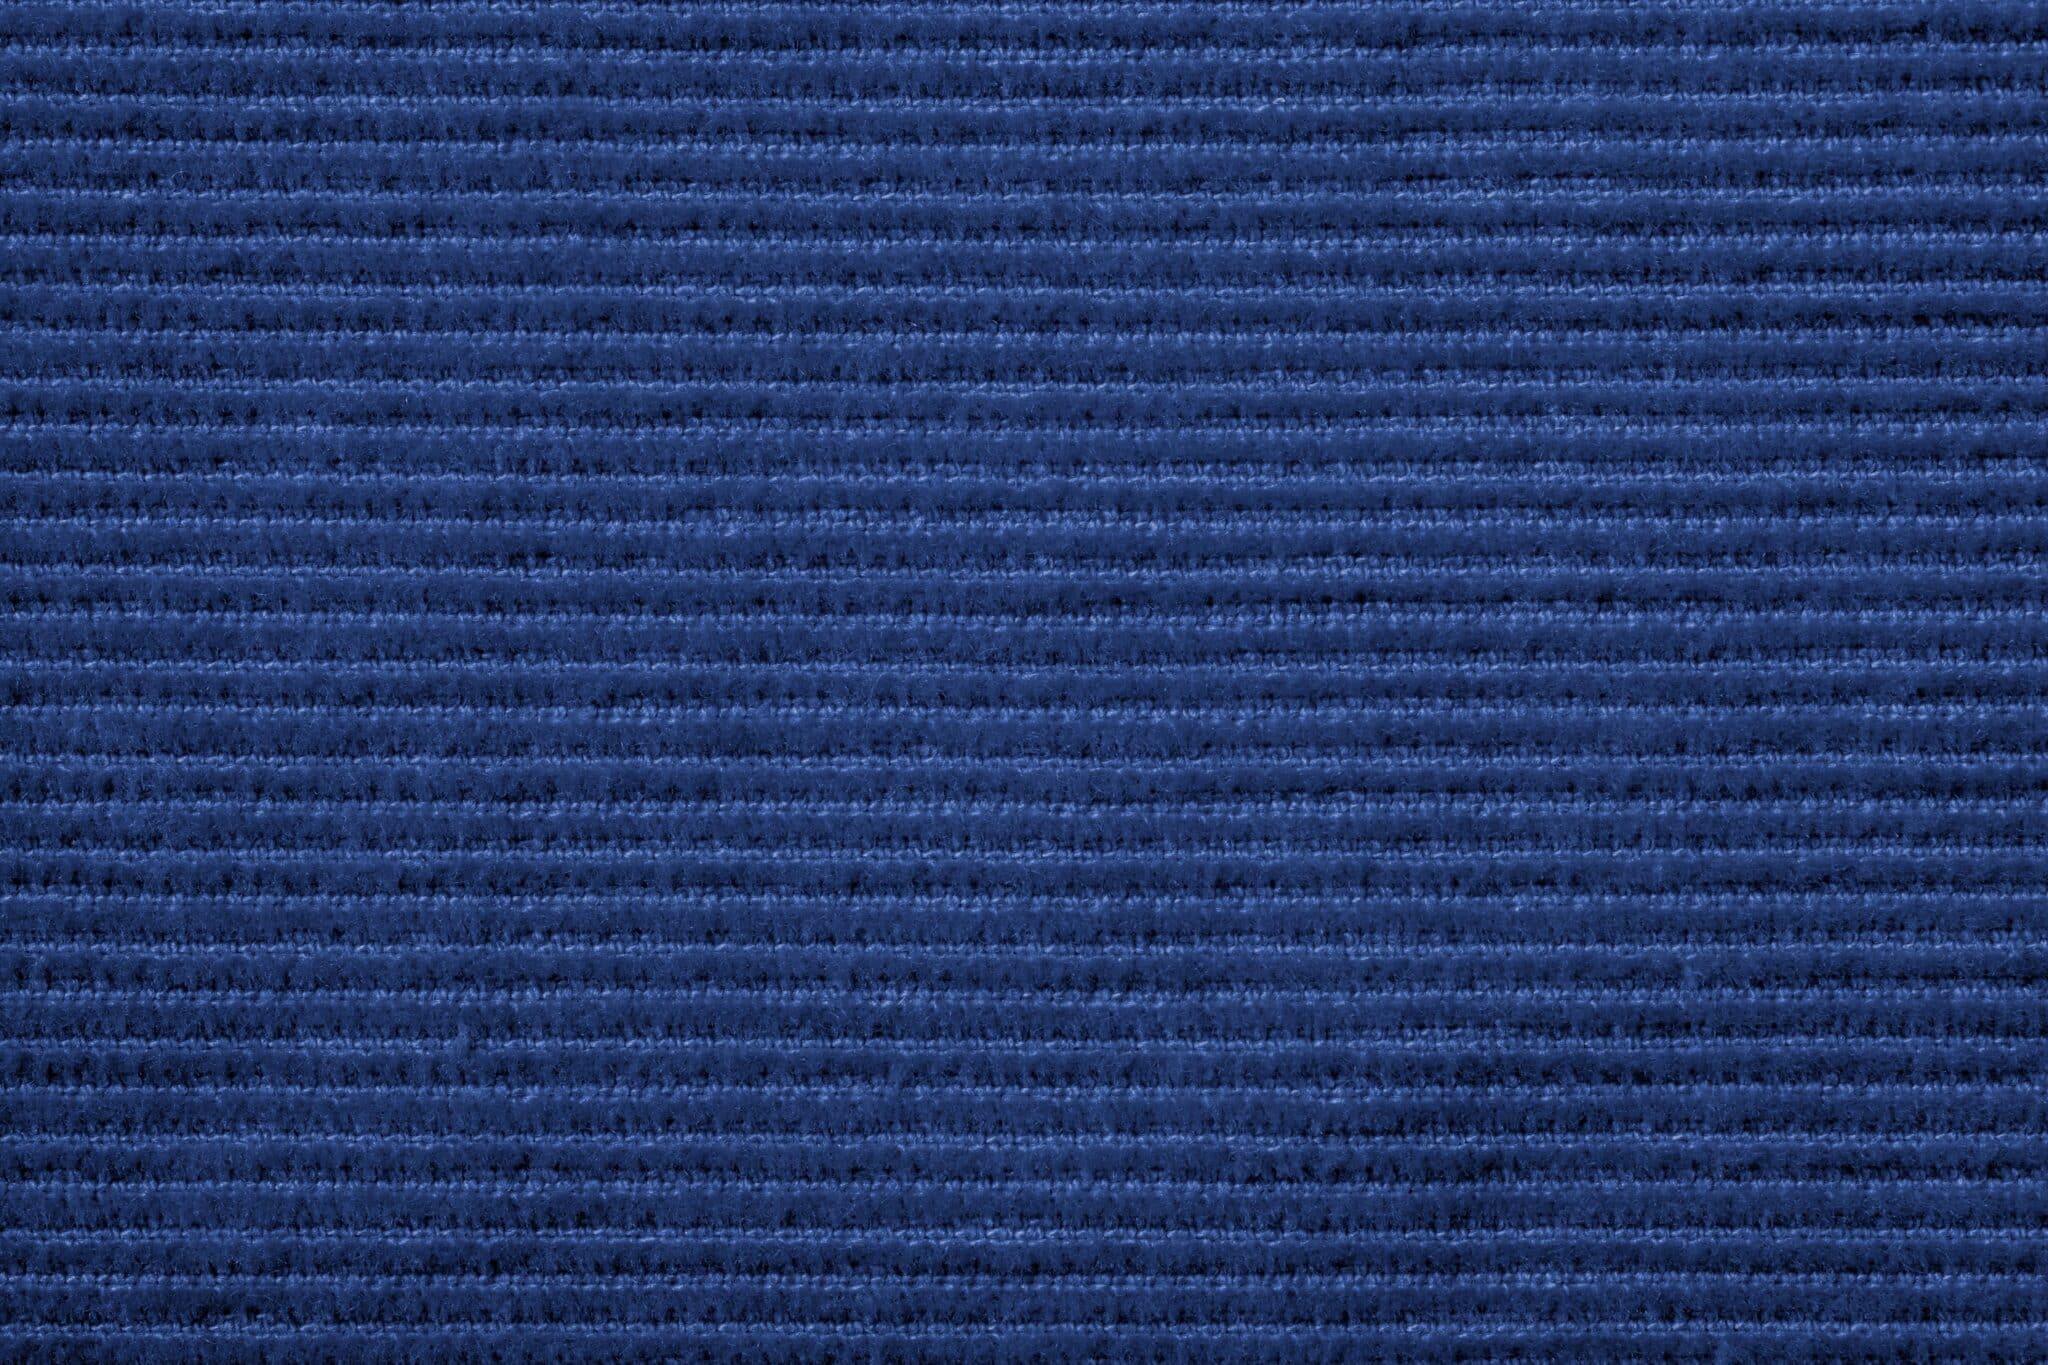 Dark Blue Corduroy Fabric